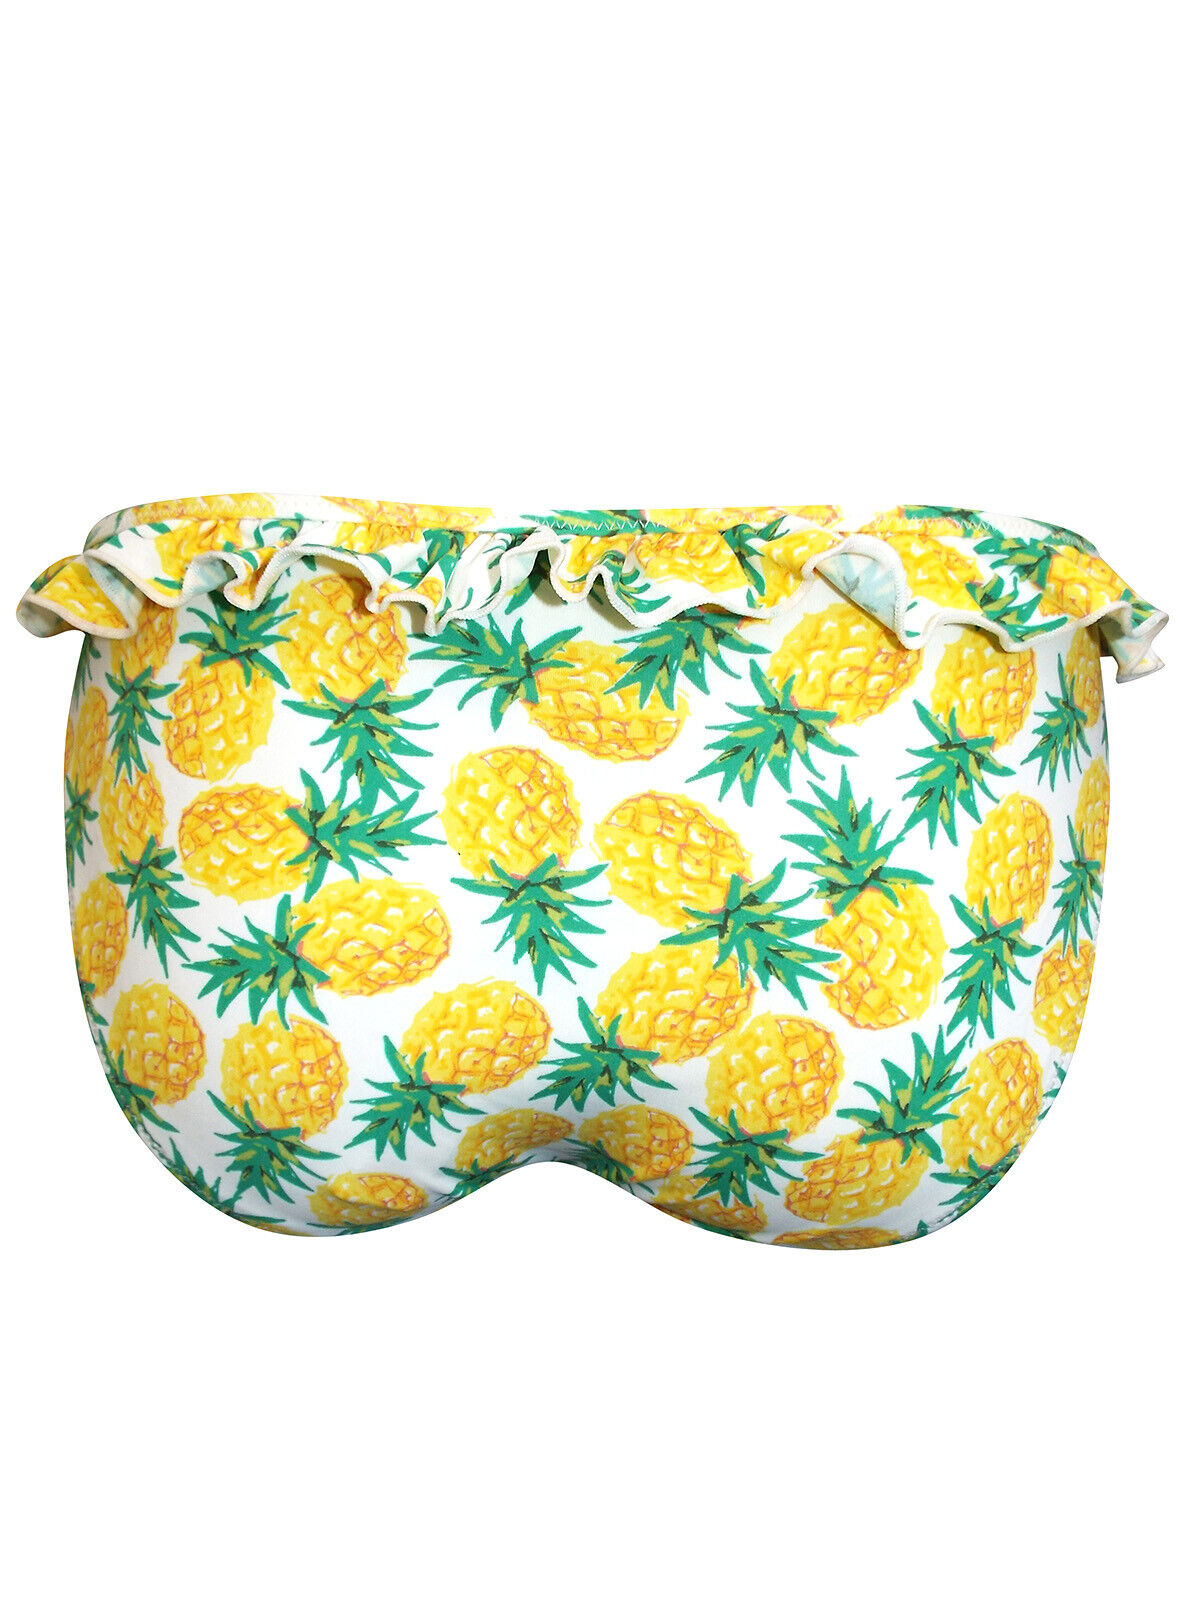 ACCESSORIZE Yellow Tropical Pineapple Print Frill Bikini Bottoms Sizes 14-18